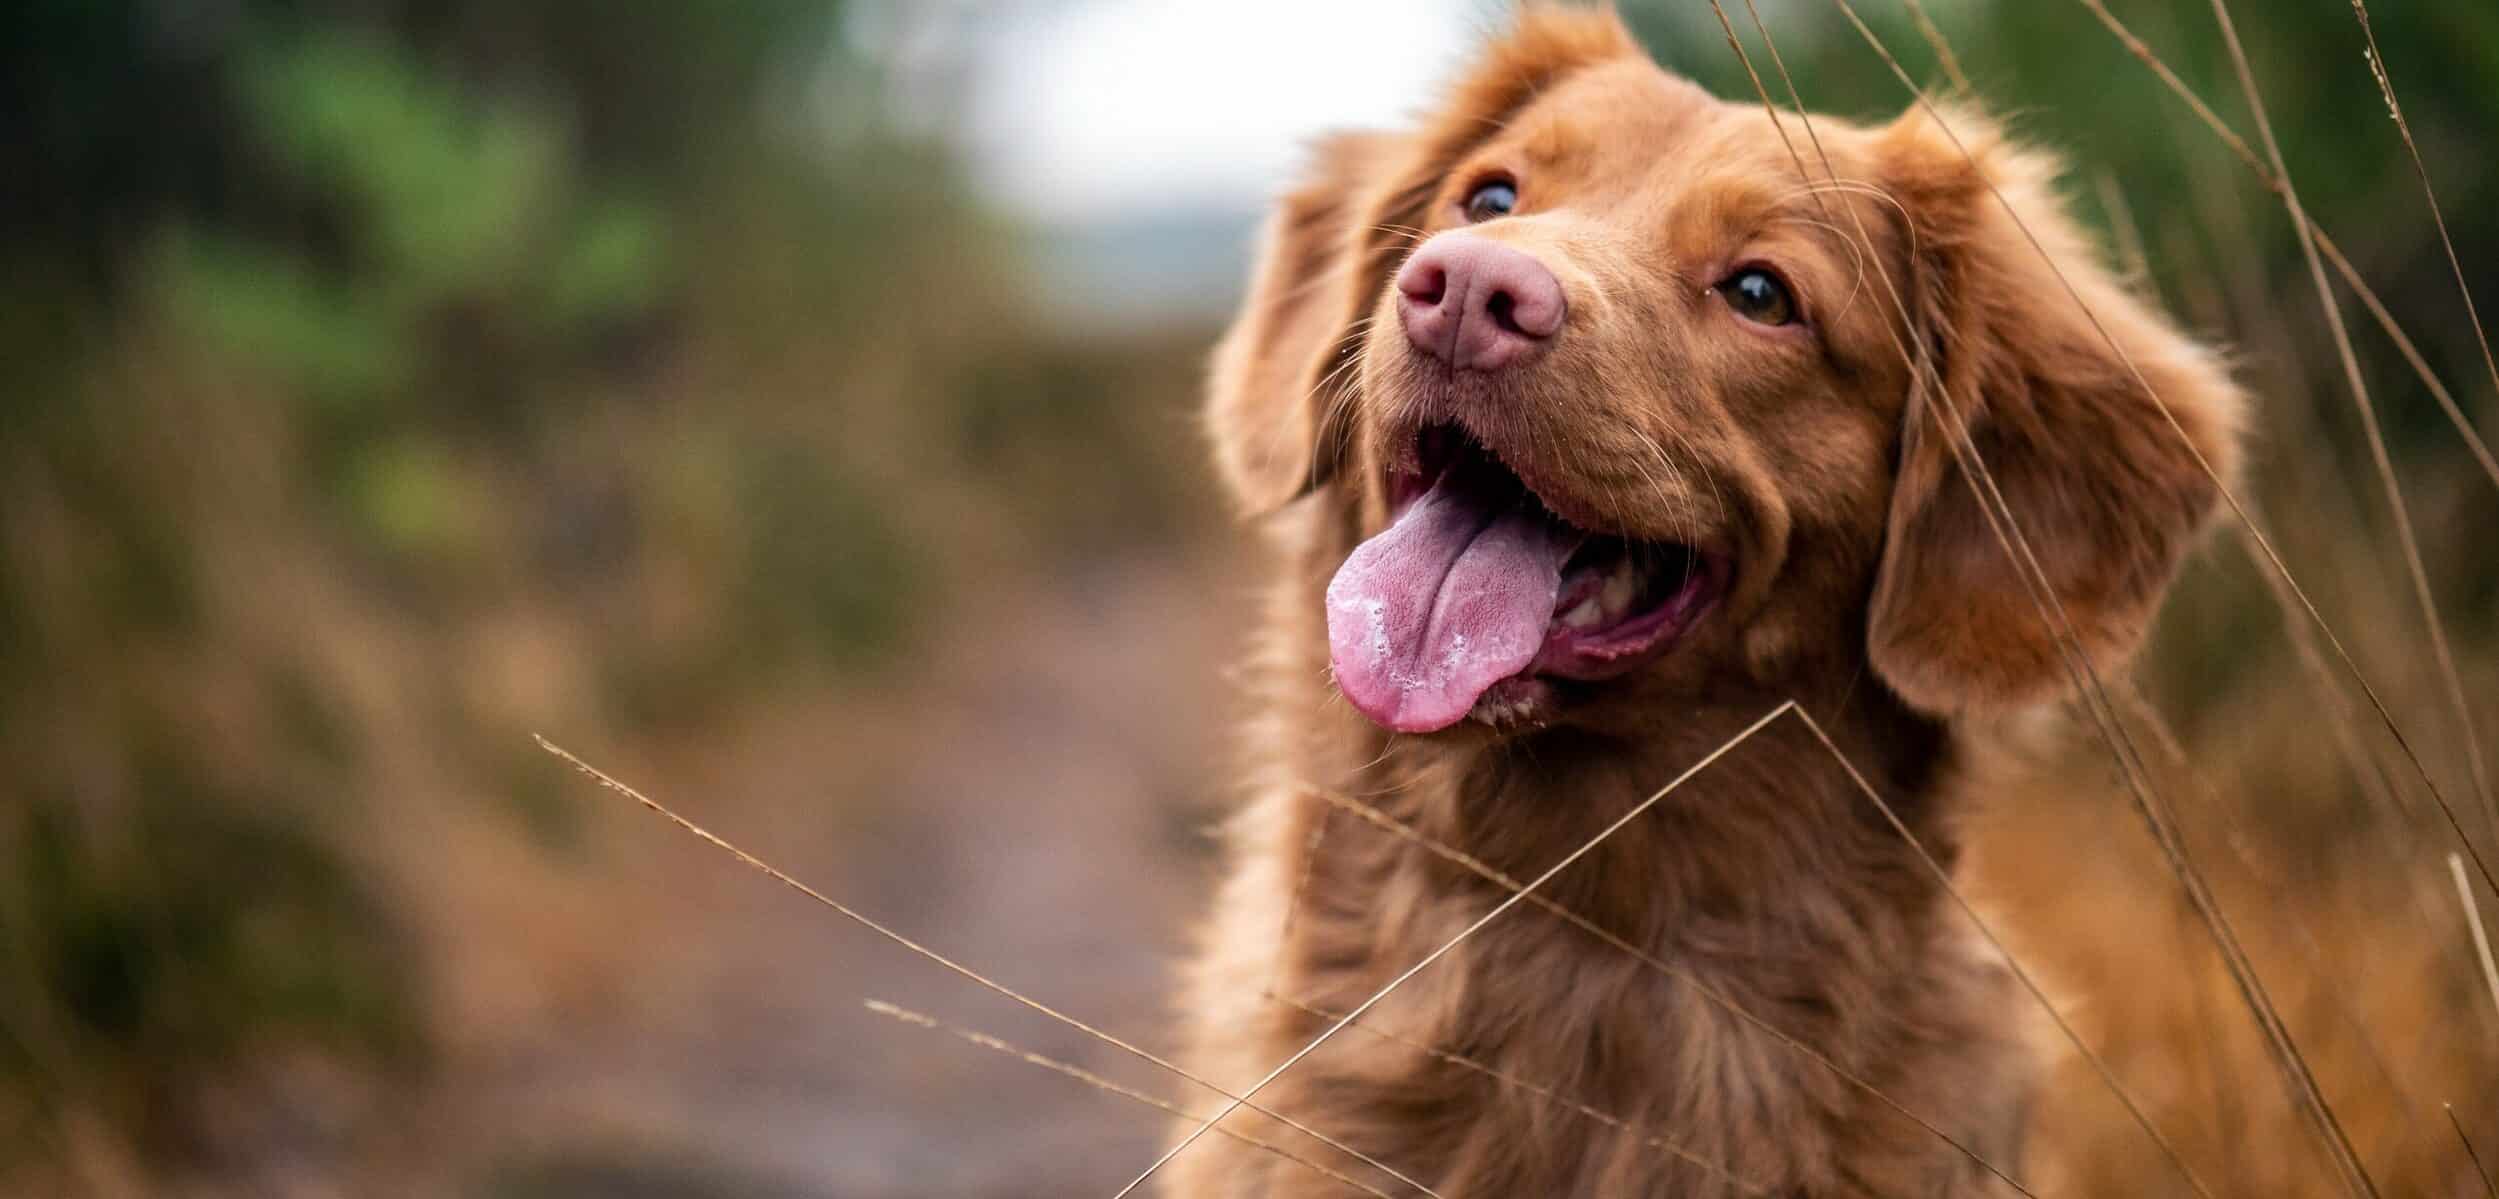 medium-coated brown dog during daytime